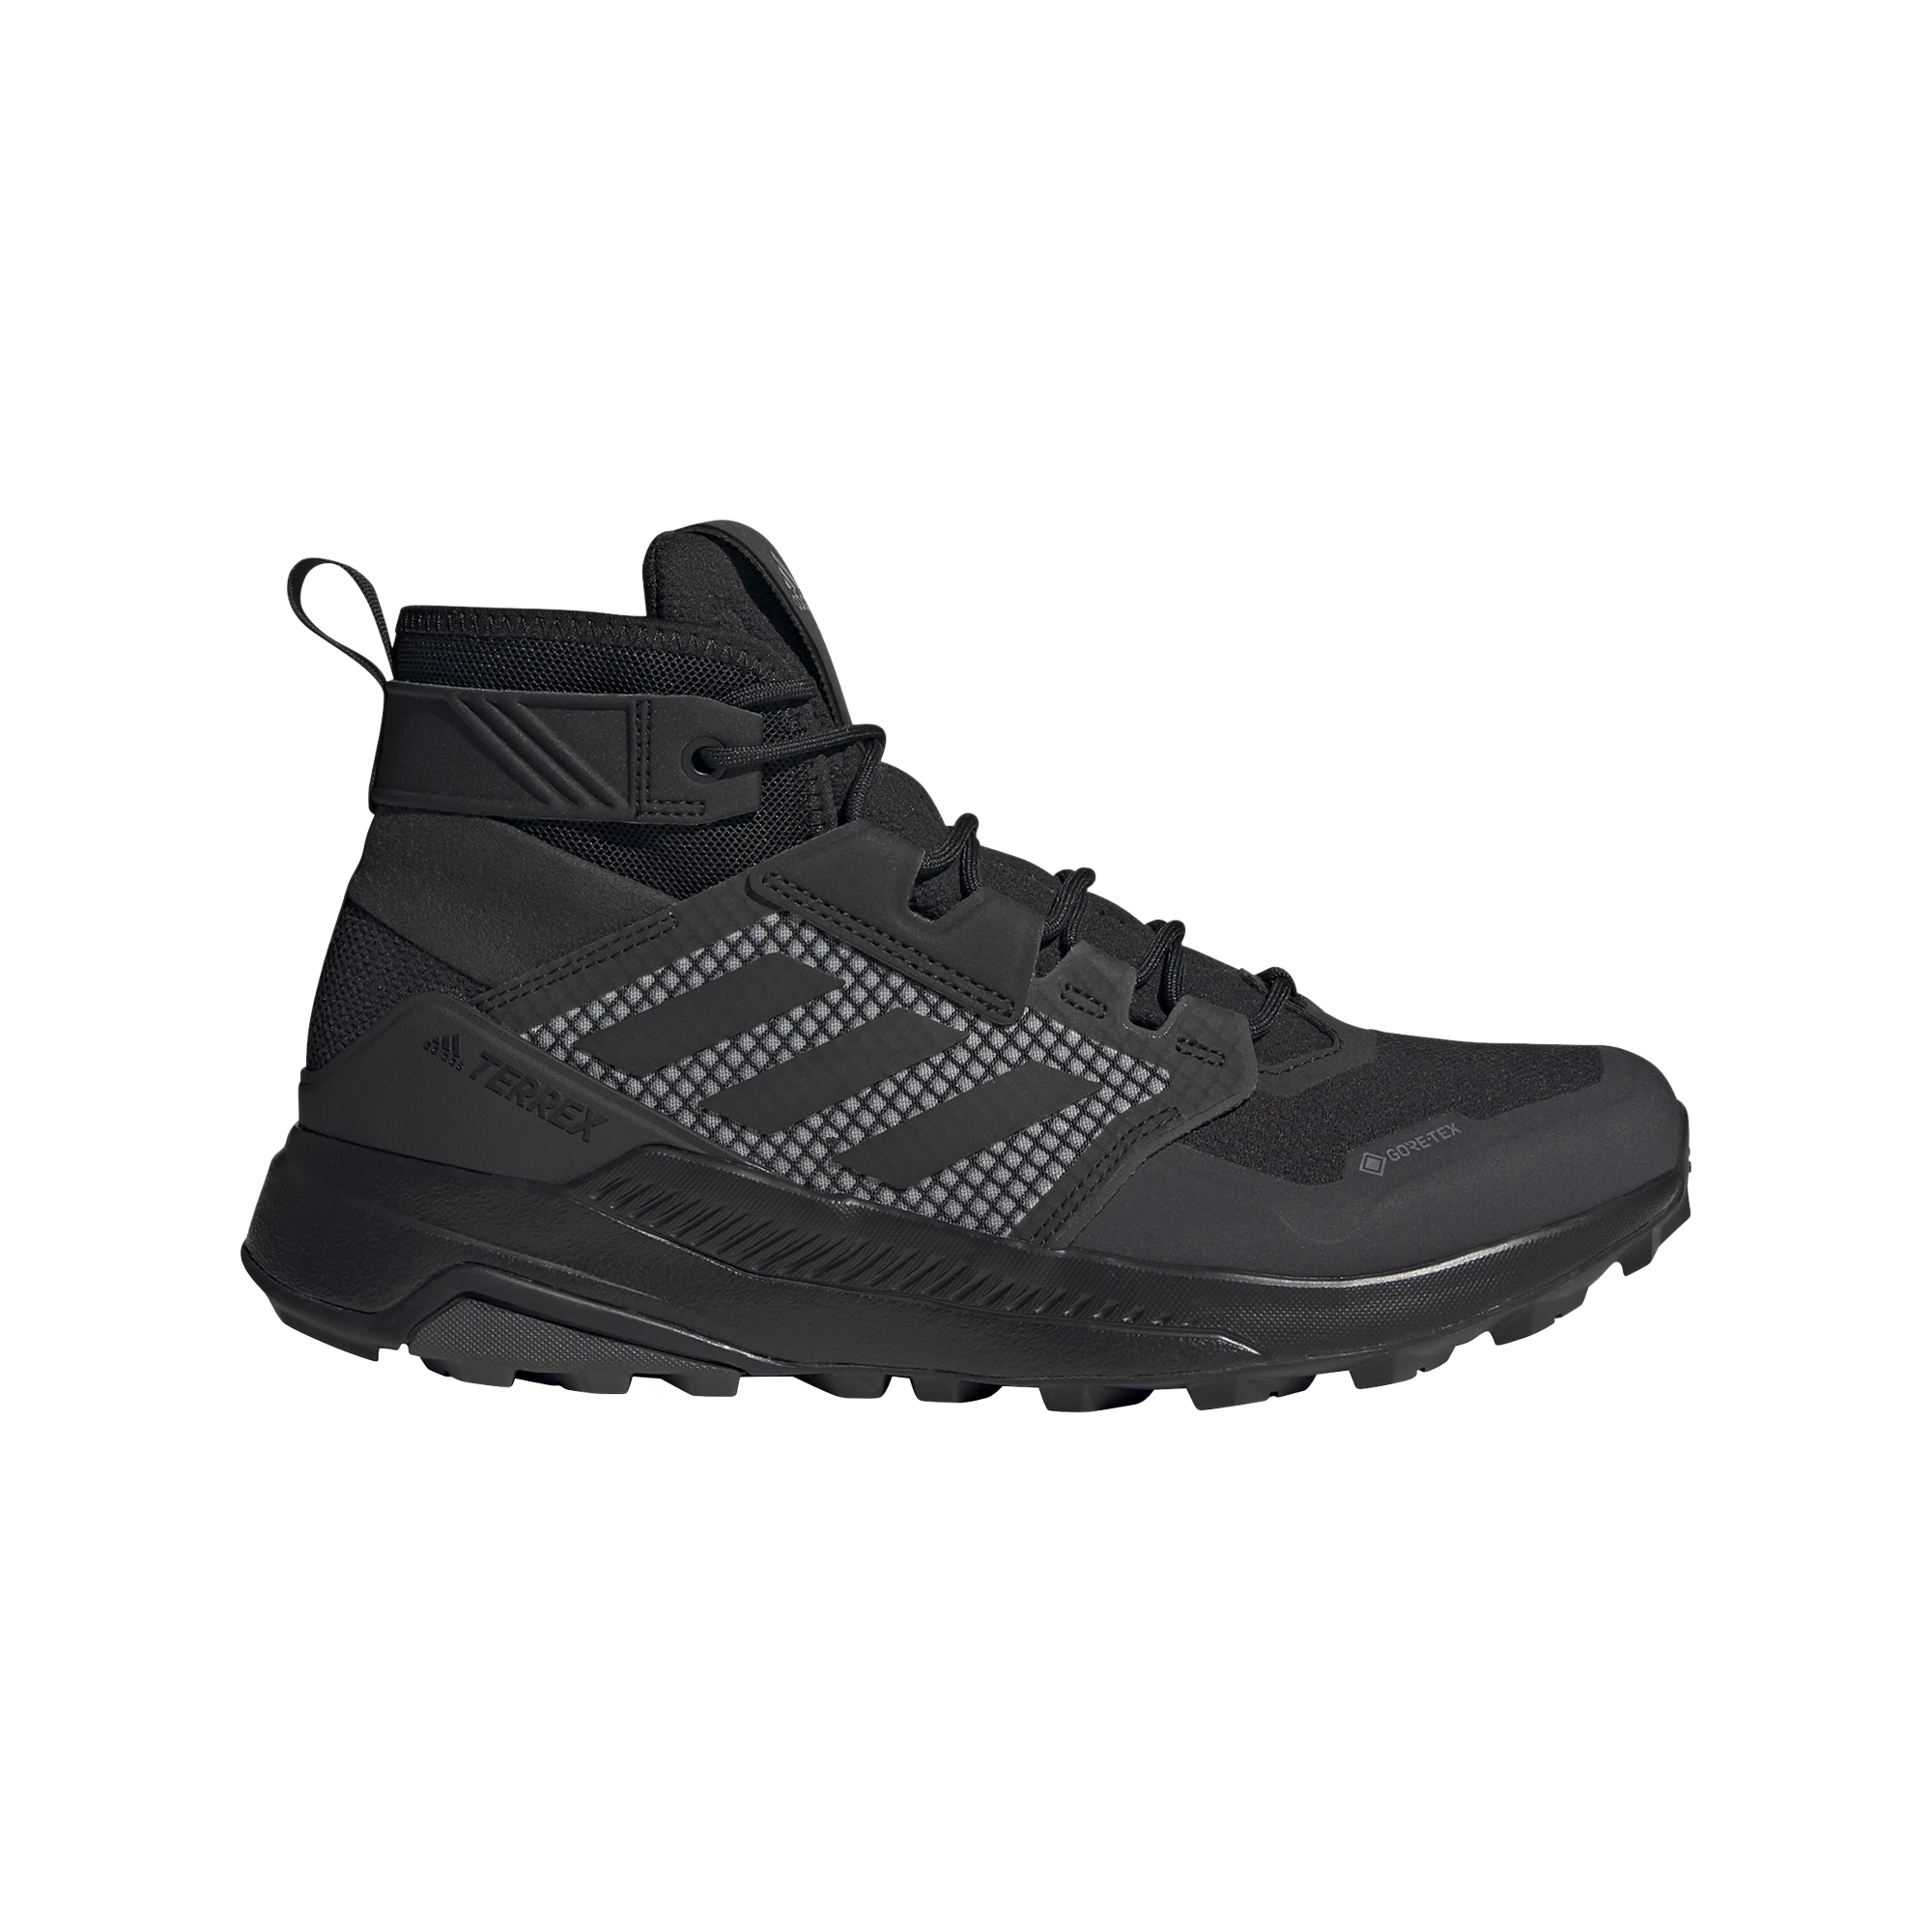 Adidas Men's Terrex Trailmaker Mid Gore-Tex Hiking Shoes Core Black/Core Black/Dgh Solid Grey 42 2/3, Core Black/Core Black/Dgh Solid Grey